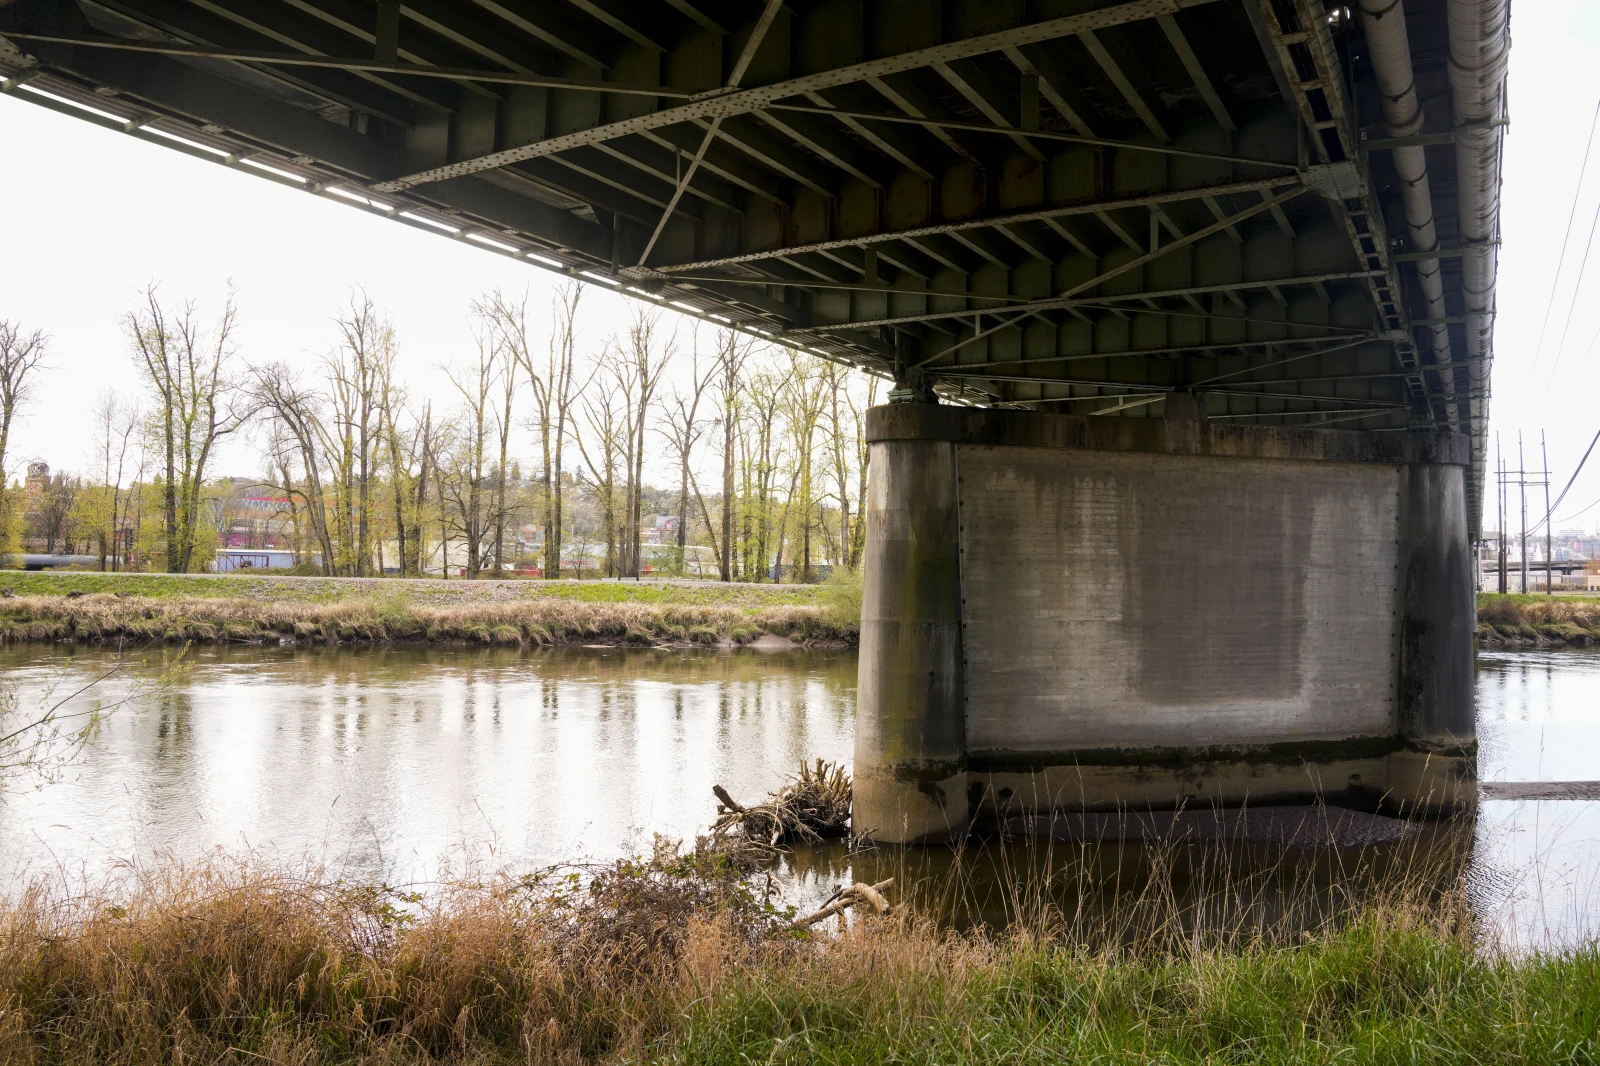 📺 Closed bridges highlight years of neglect, backlog of repairs awaiting funding (apnews.com)